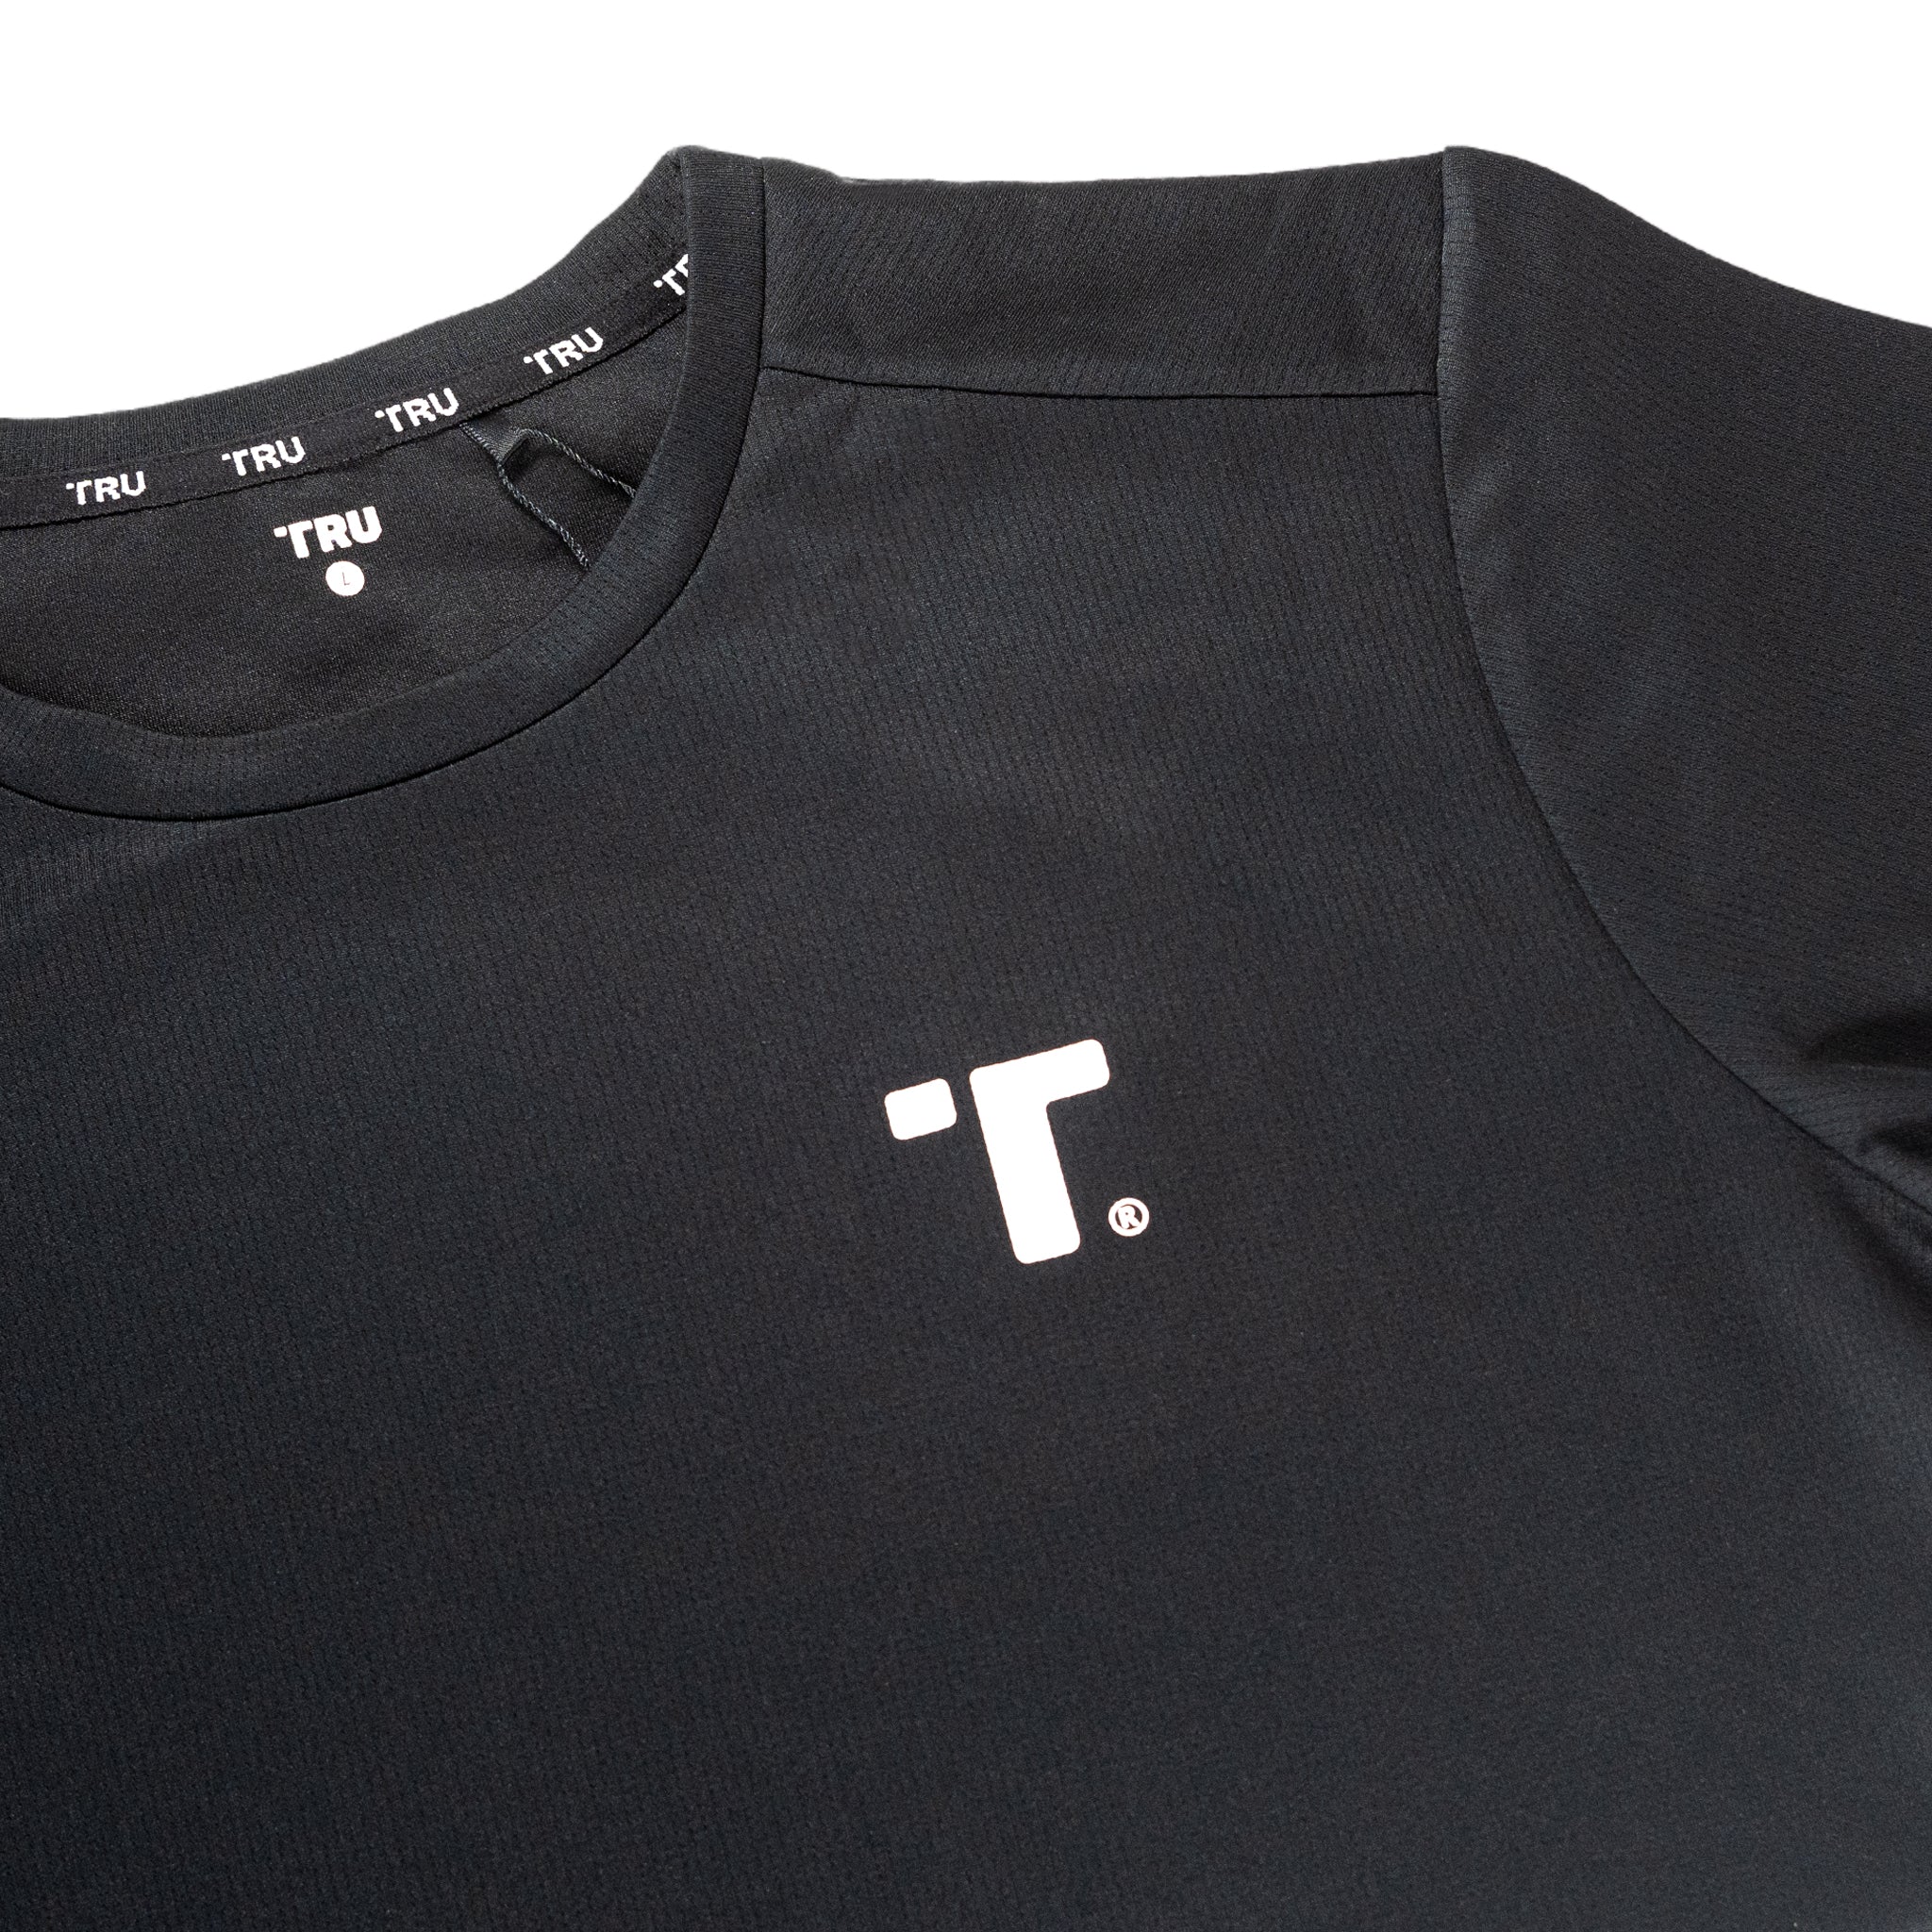 TRU 559 - Camiseta manga corta